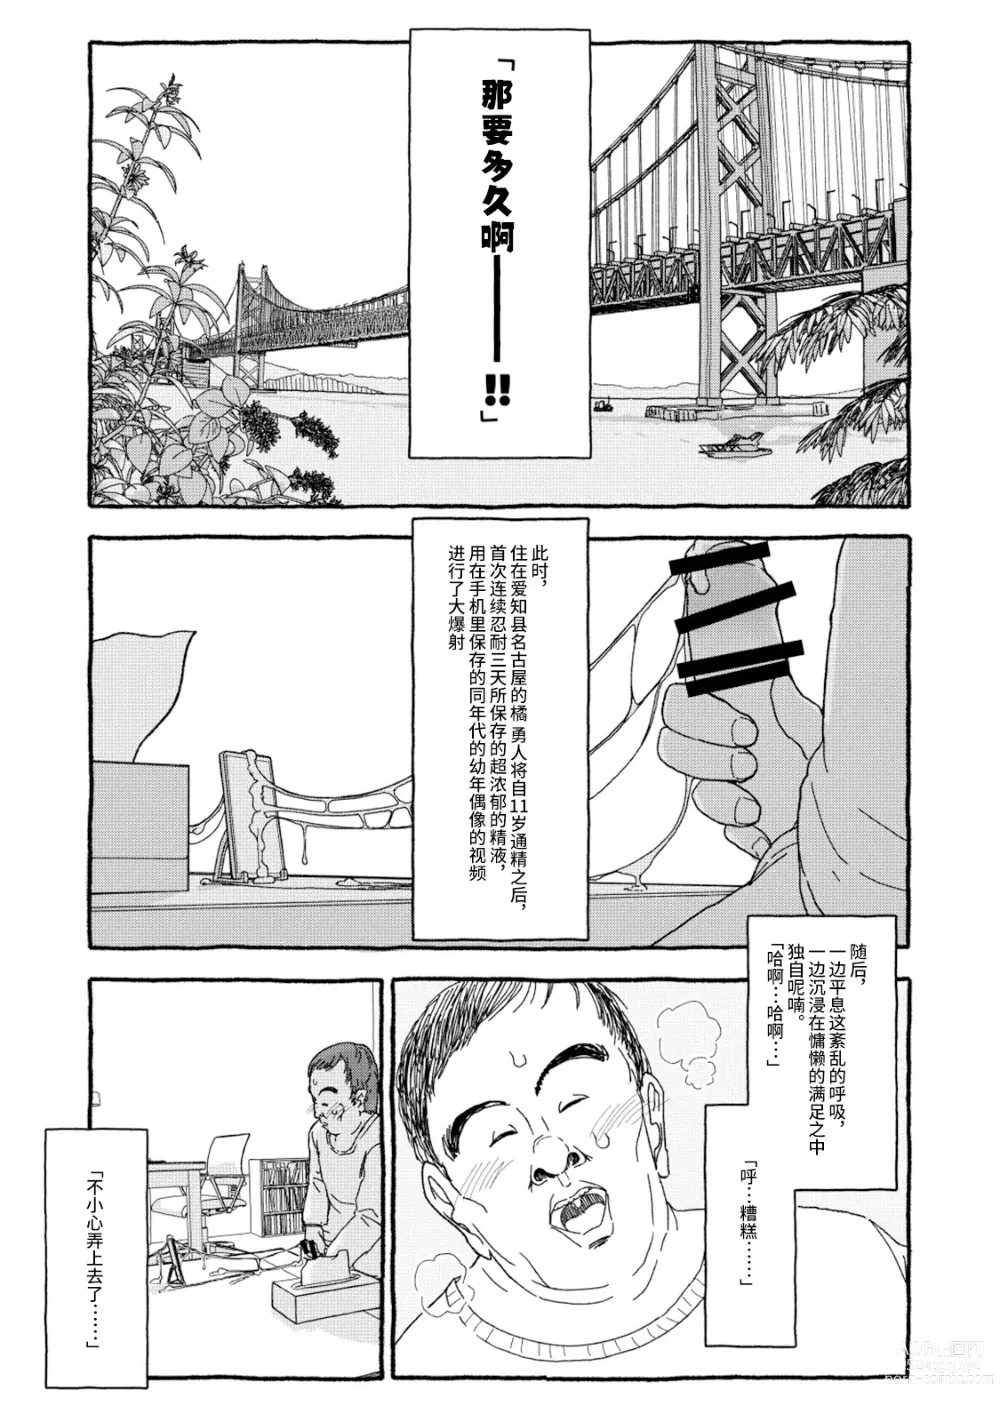 Page 9 of doujinshi 相遇四光年后合体 前篇